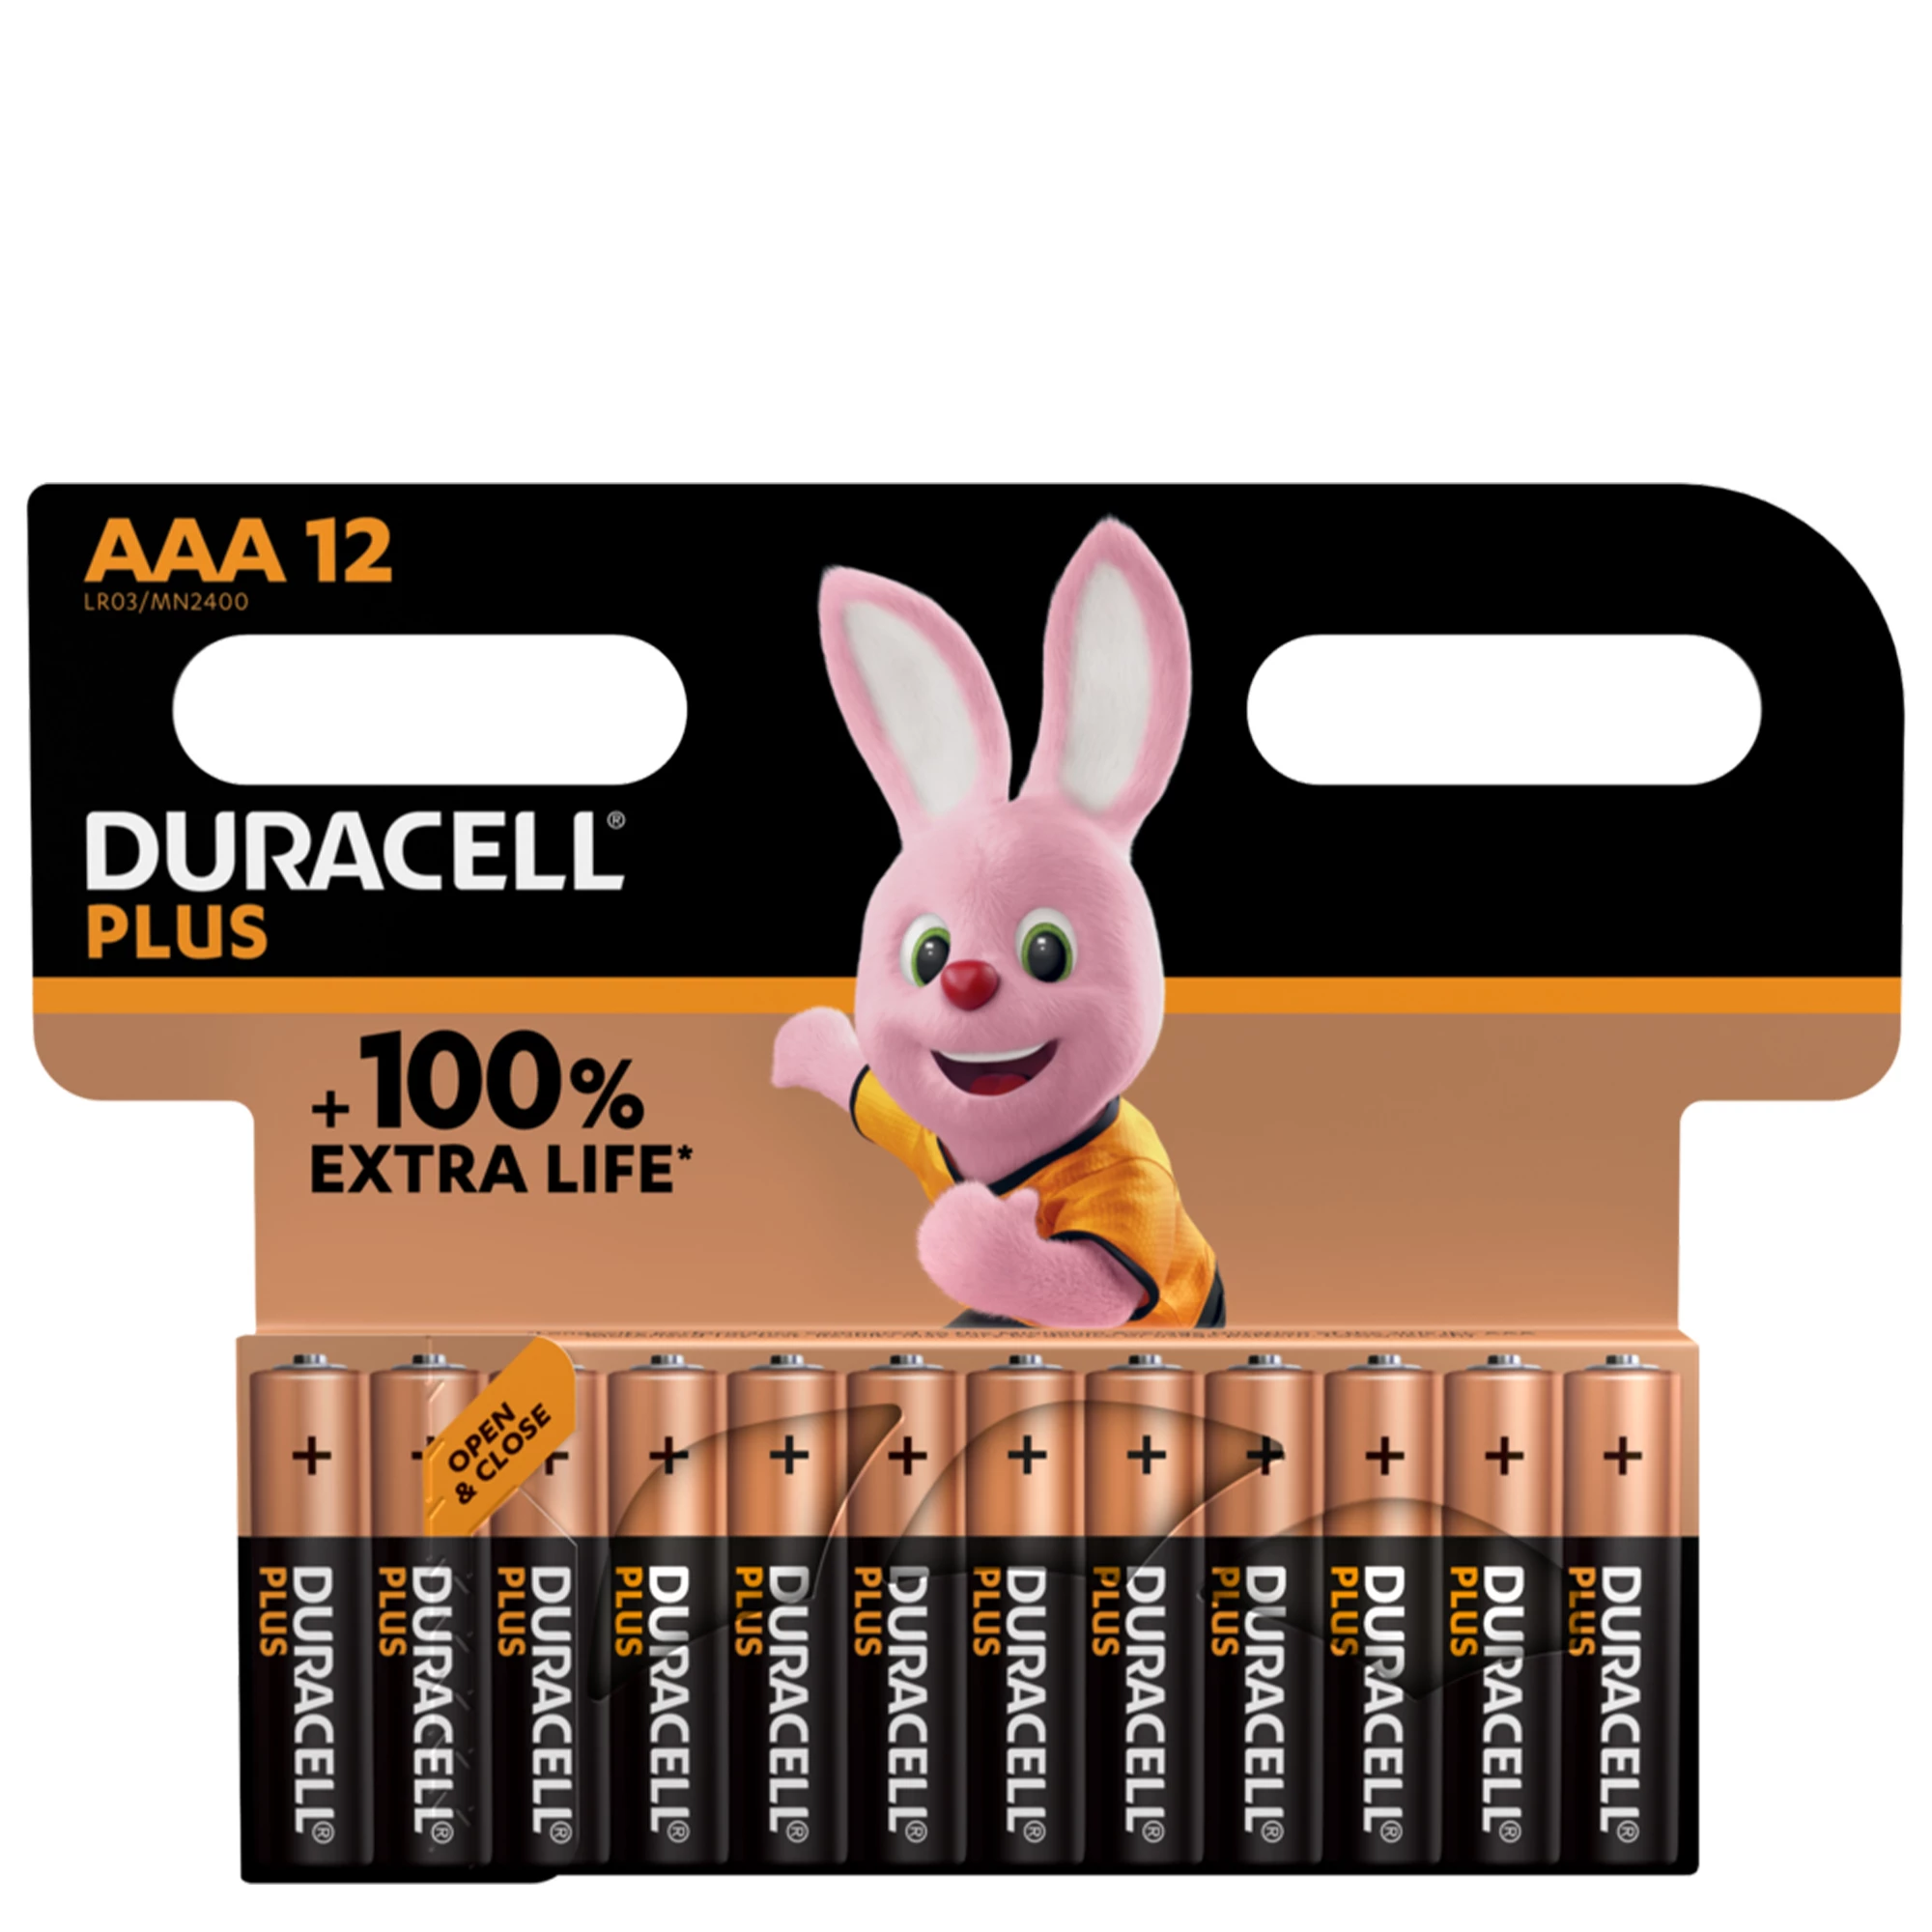 Щелочные батарейки Duracell Plus AAA Alkaline Batteries +100% EXTRA LIFE [Pack of 12] 1,5V LR03/MN2400 (5000394141230)